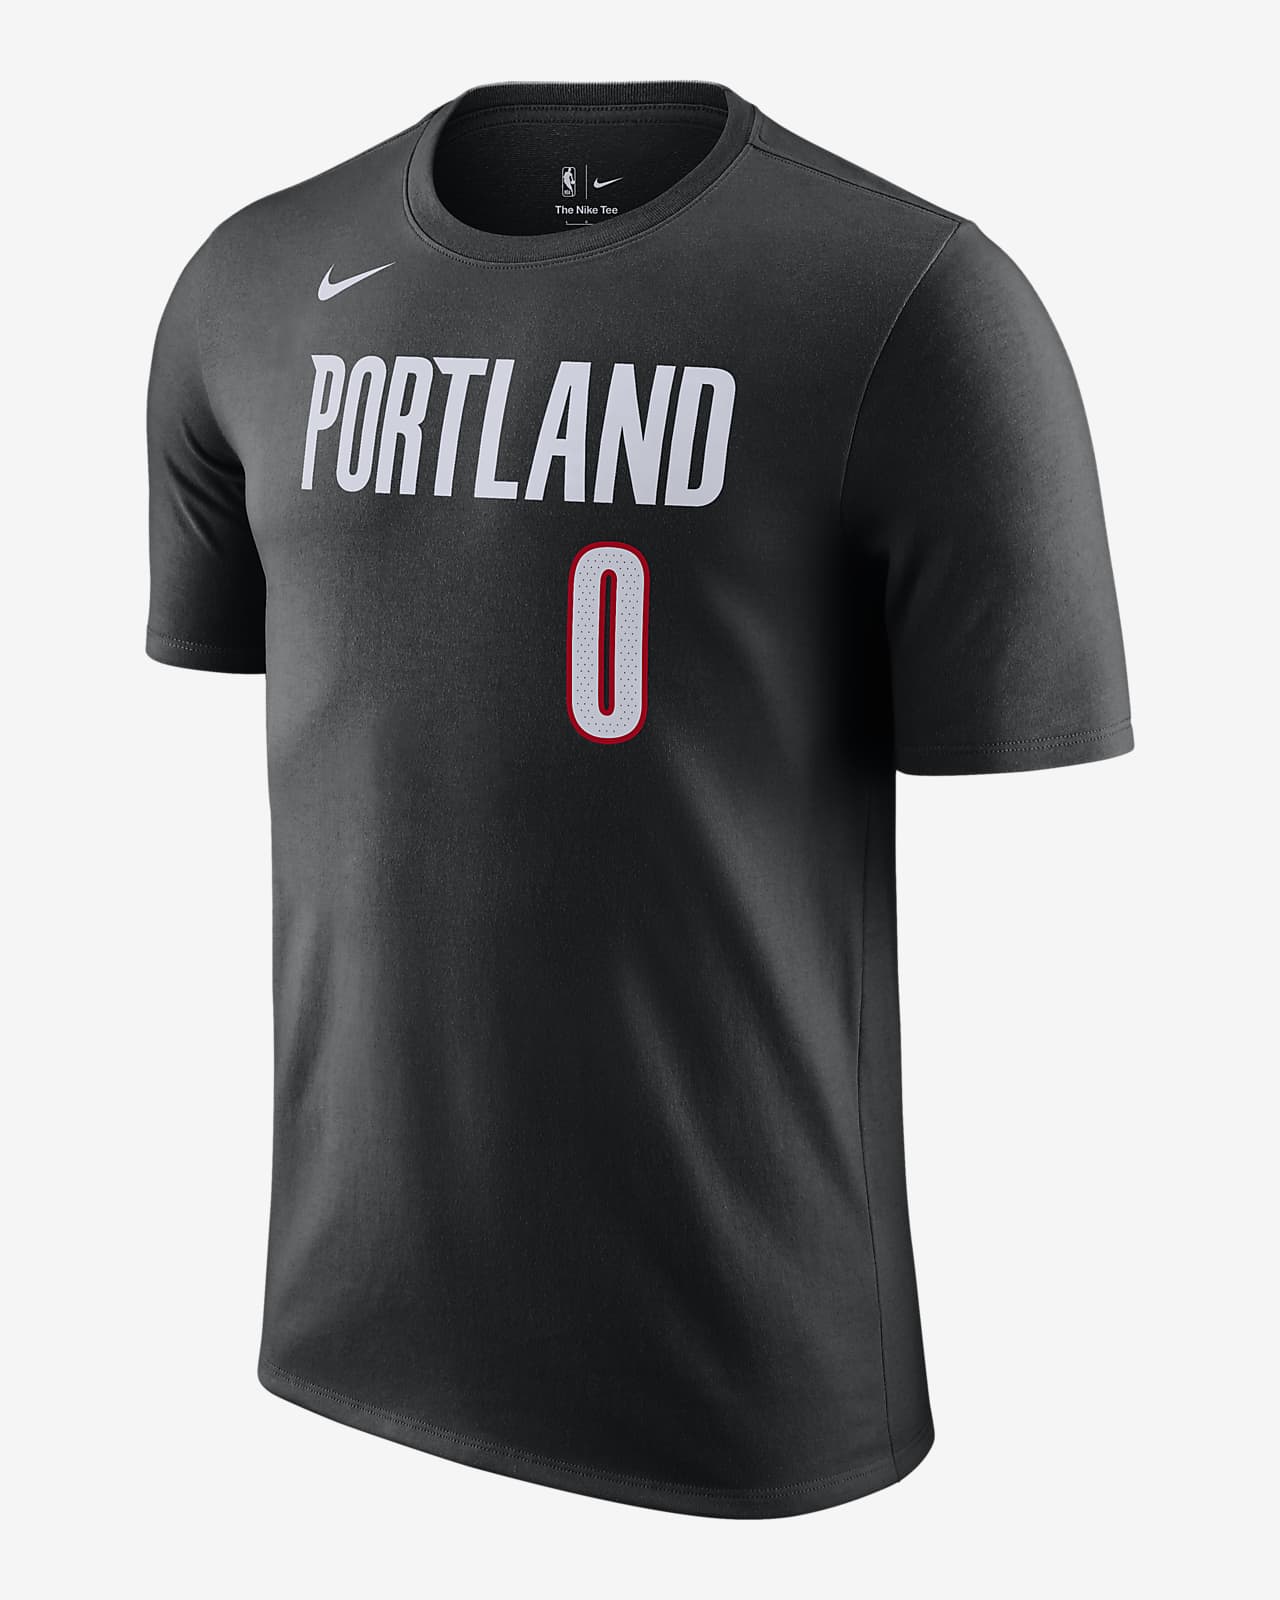 Playera Nike NBA para hombre Portland Trail Blazers